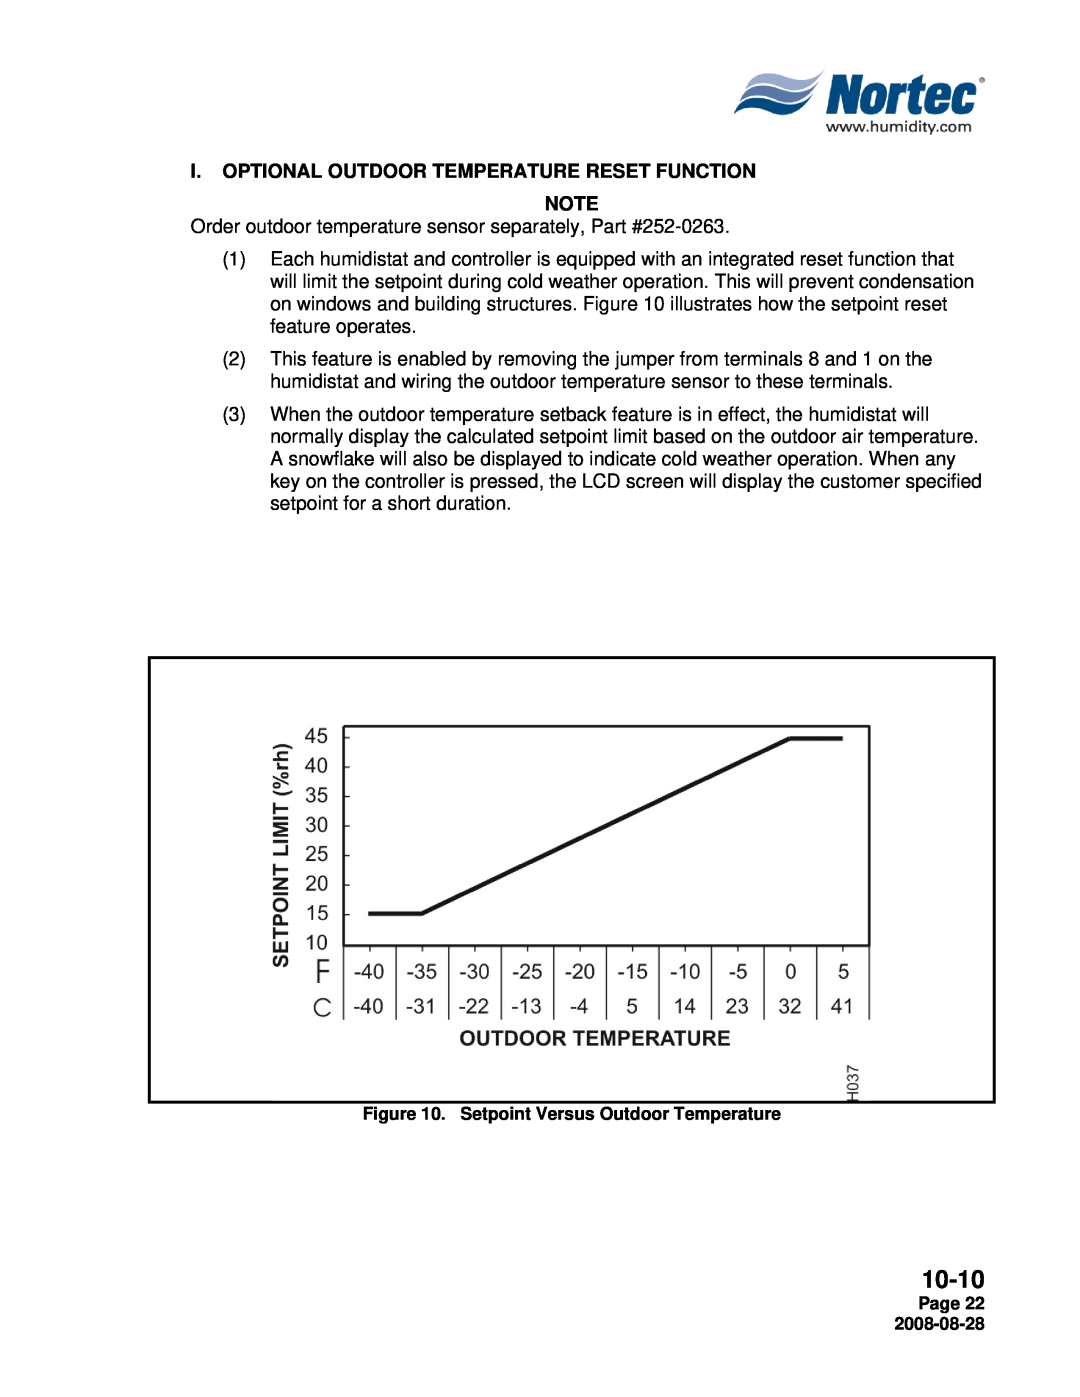 Nortec NH Series I.Optional Outdoor Temperature Reset Function, 10-10, Setpoint Versus Outdoor Temperature, Page 22 